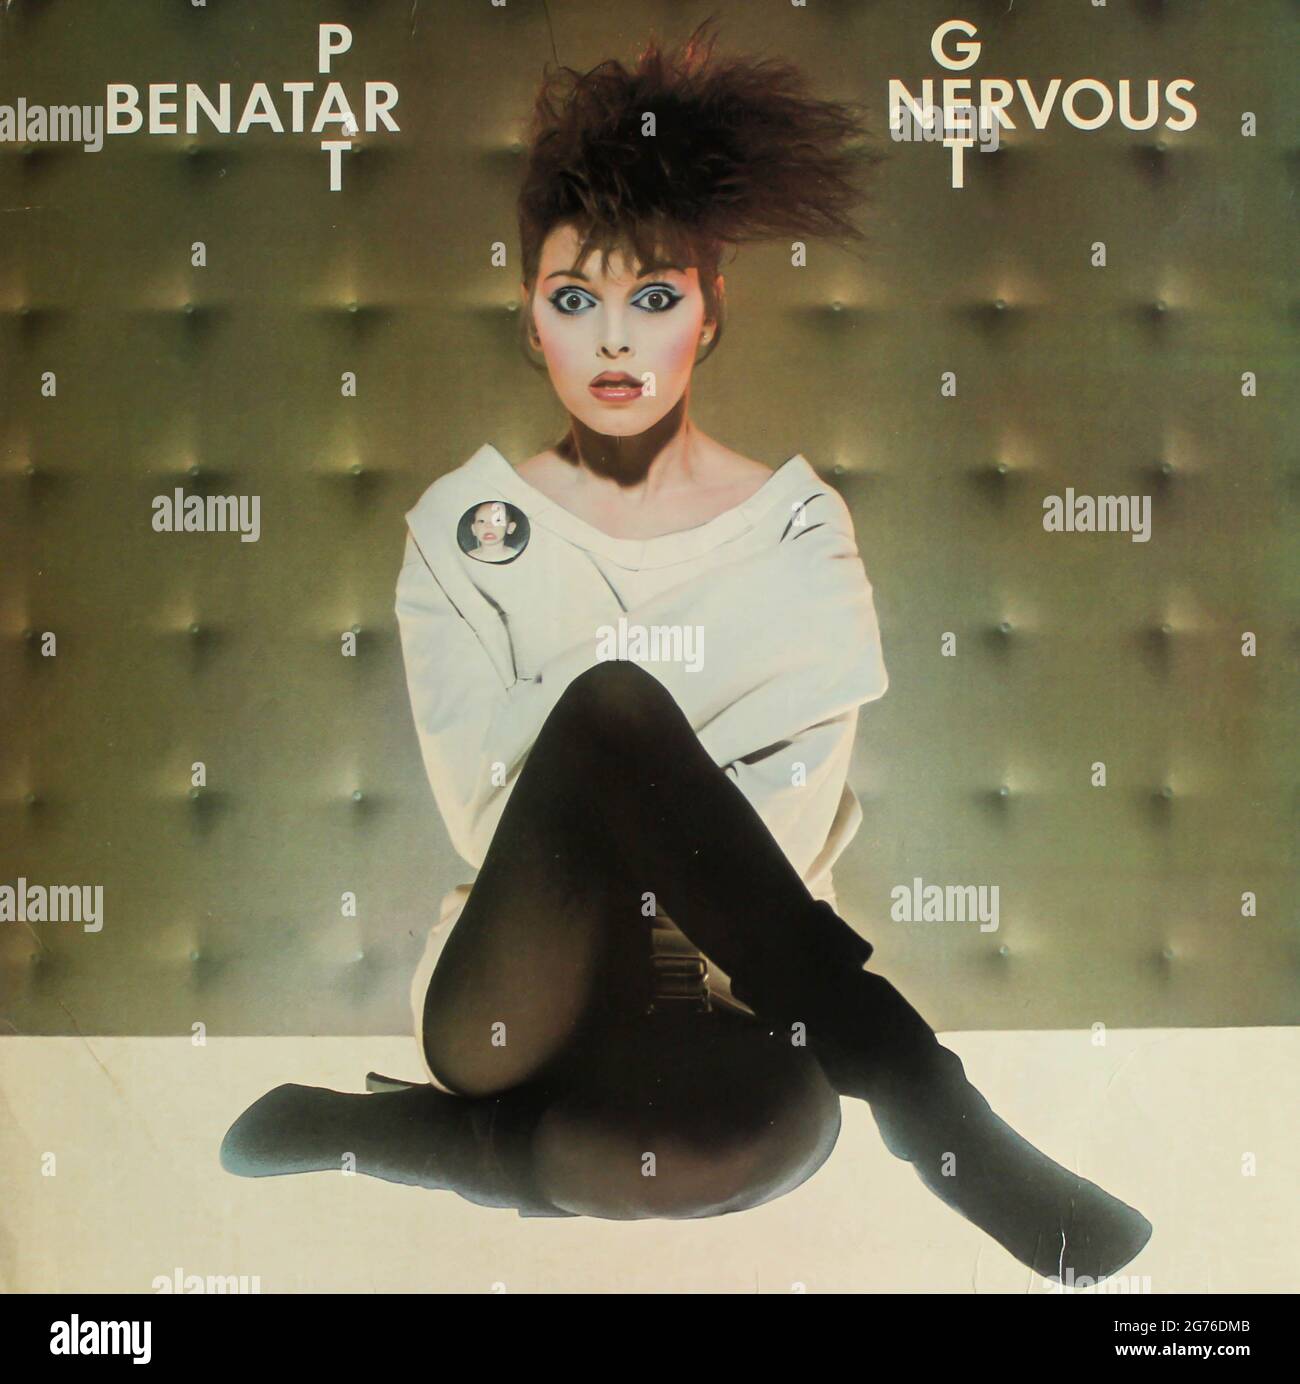 Hard rock and pop rock artista, Pat Benatar álbum de música en disco LP de vinilo. Título: Get Nervious álbum de portada Foto de stock